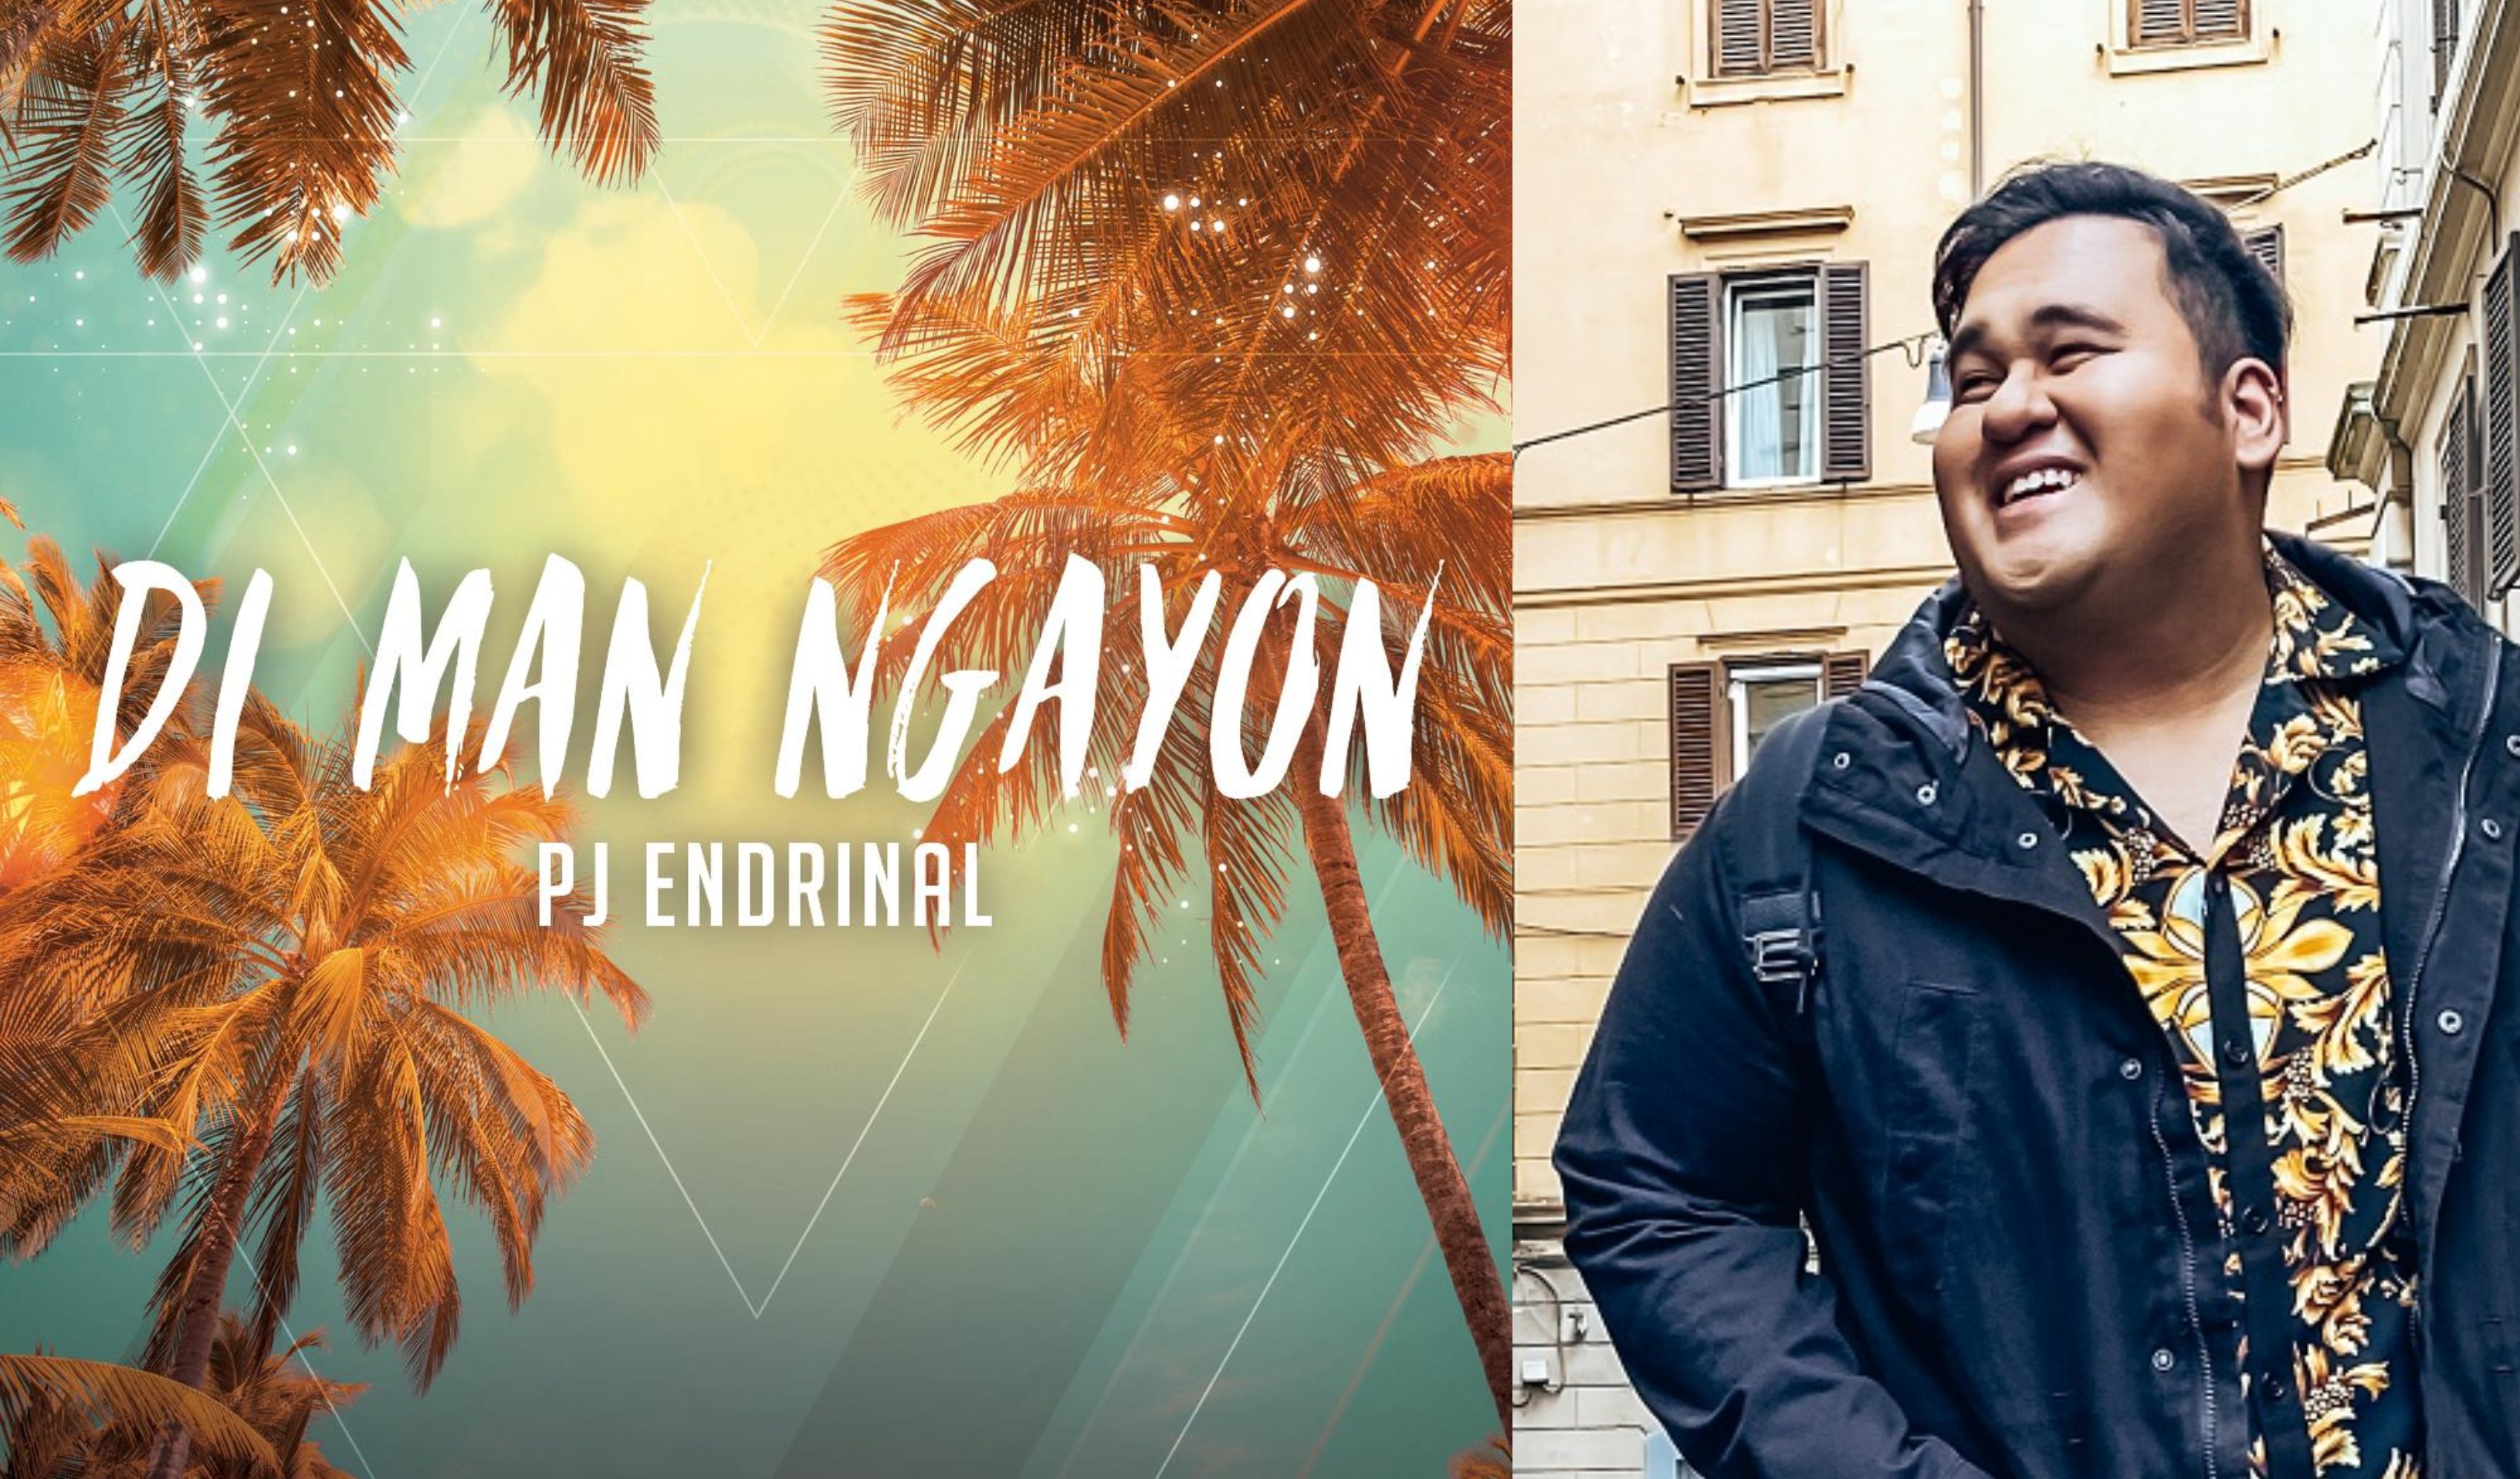 PJ Endrinal pledges his love in "Di Man Ngayon" single